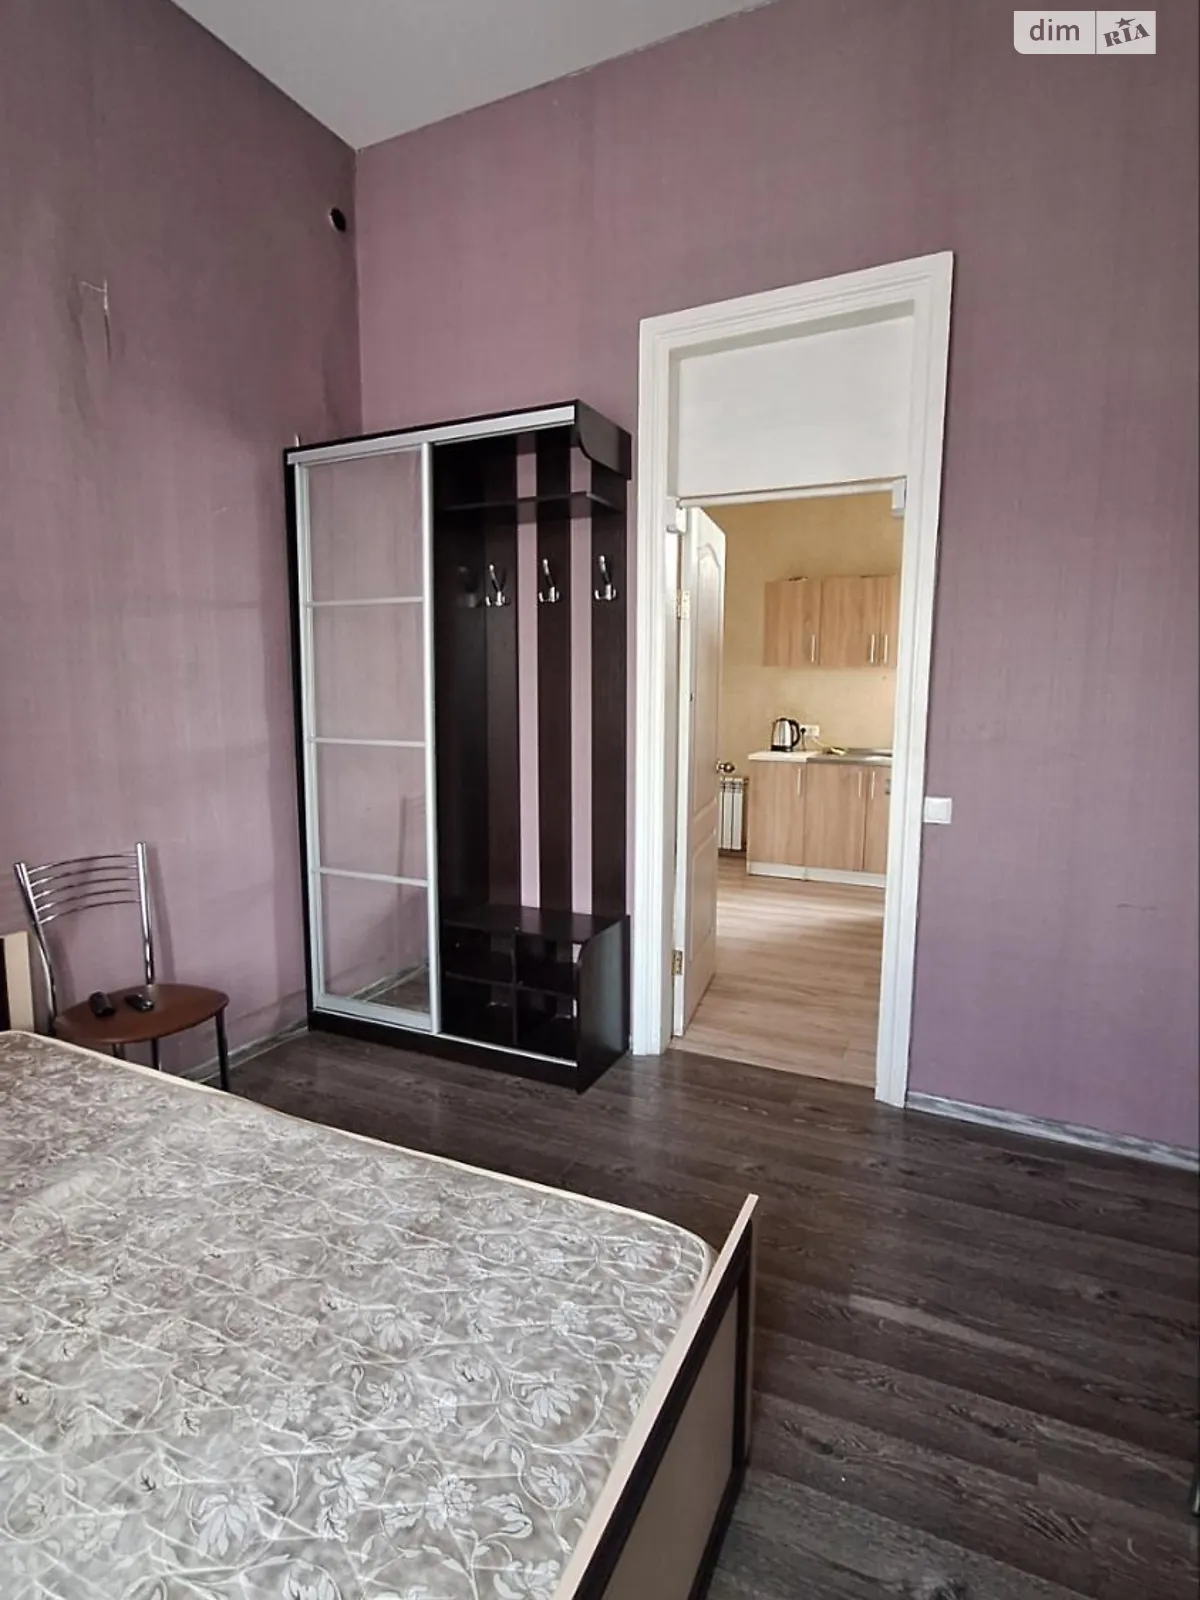 Продается комната 21 кв. м в Харькове - фото 2